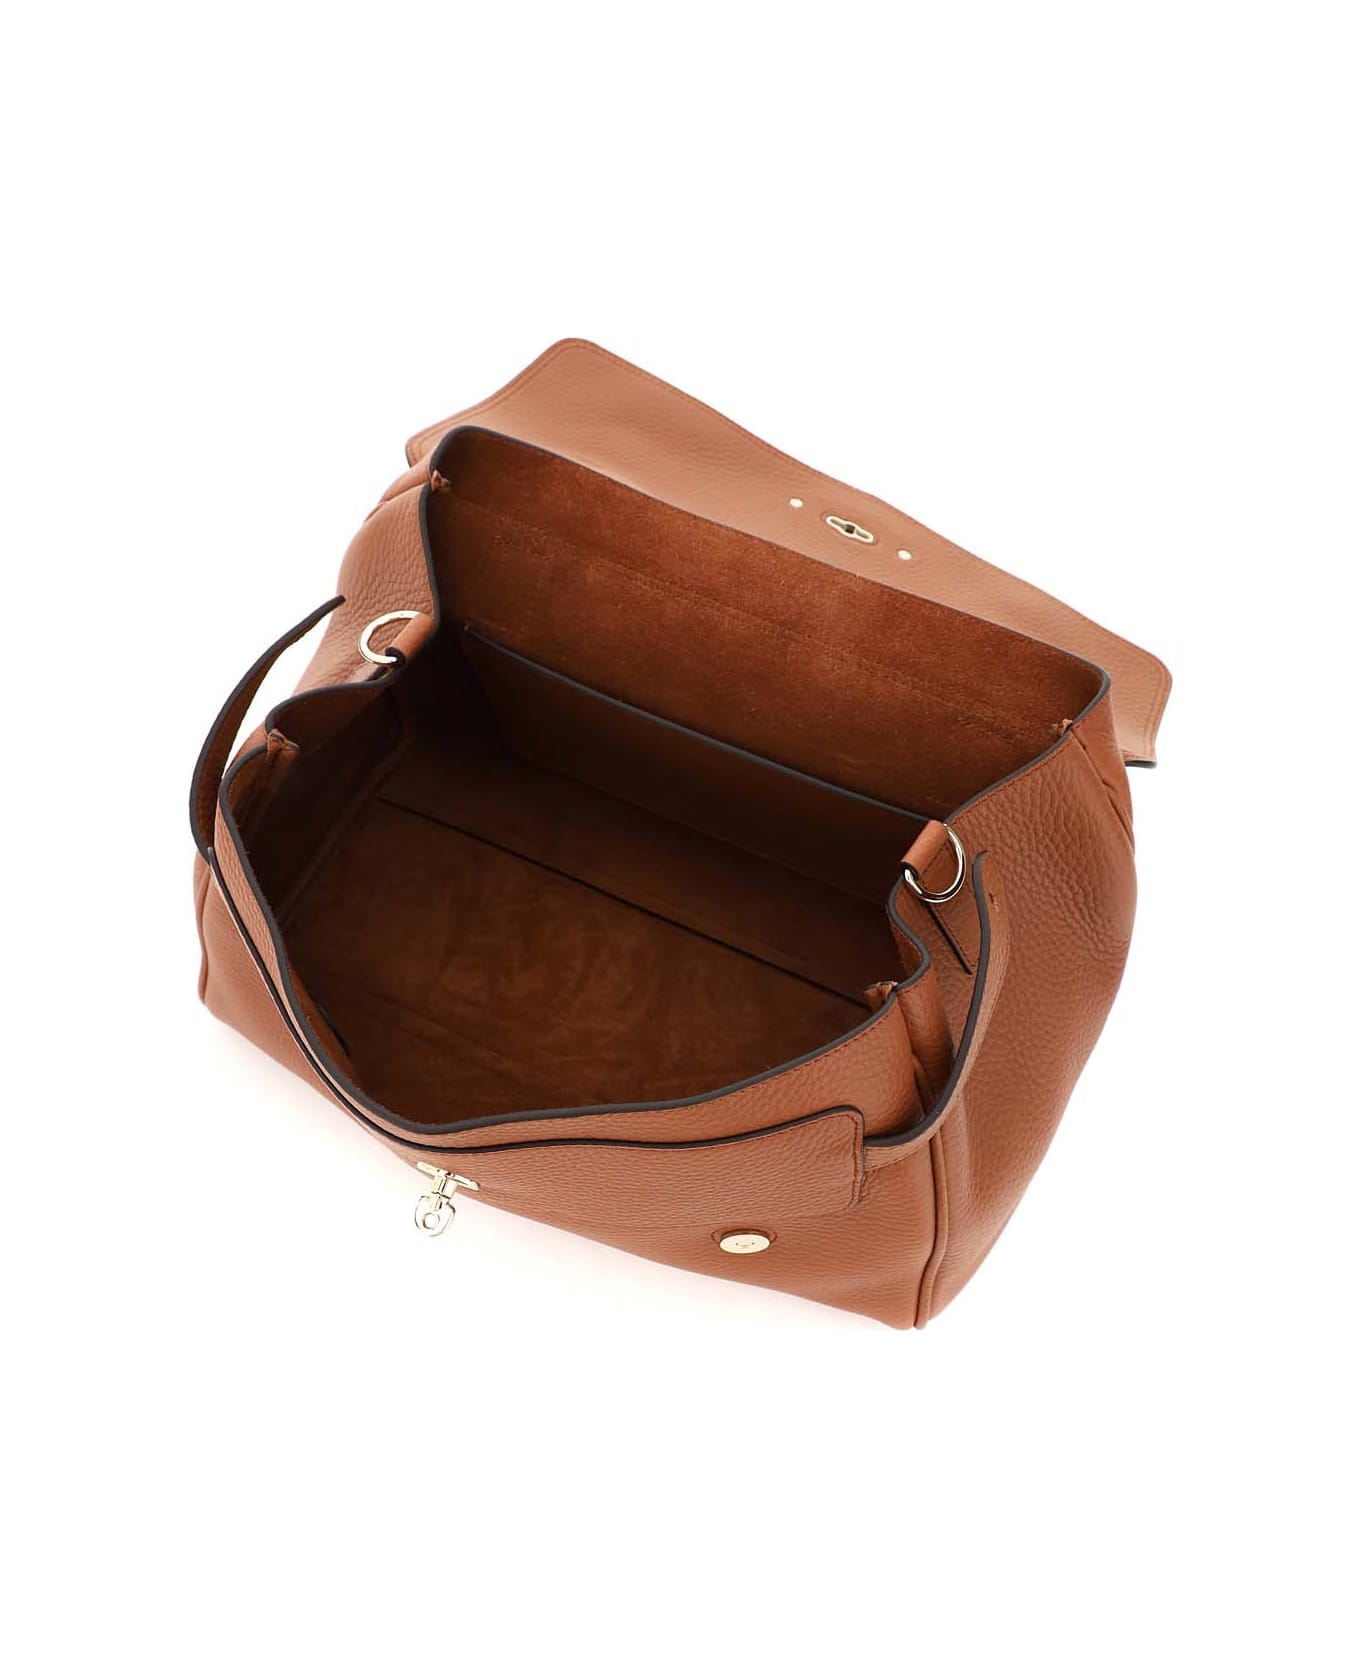 Mulberry Alexa Medium Handbag - CHESTNUT (Brown) トートバッグ